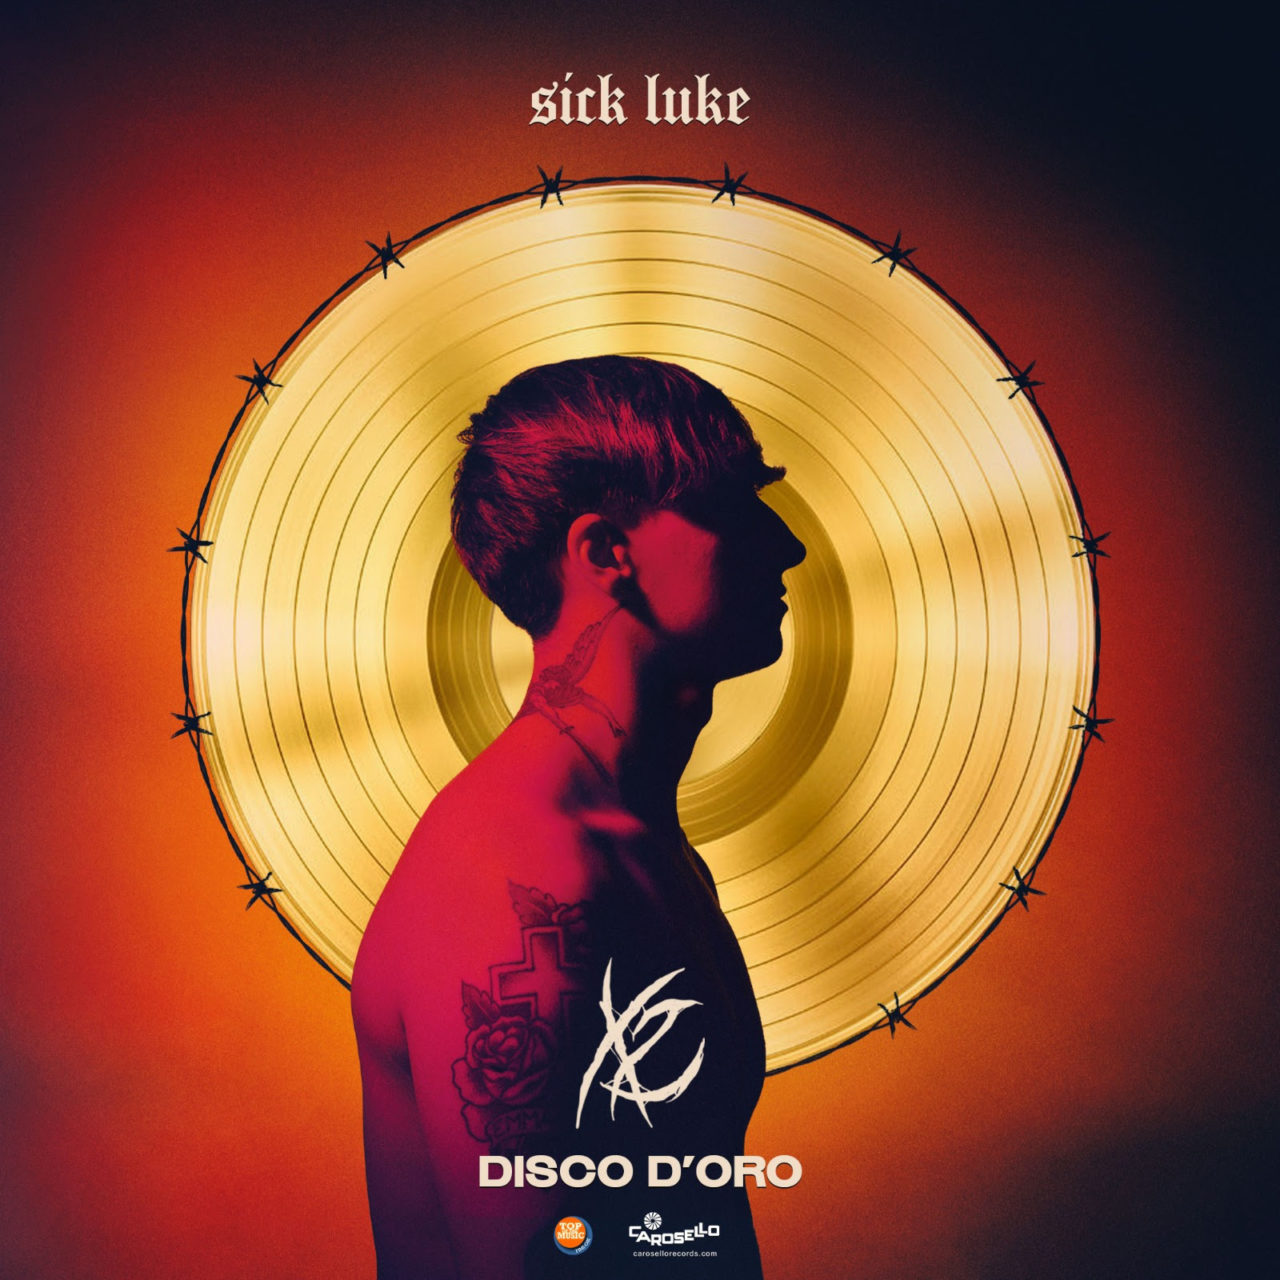 Sick Luke X2 disco d'oro